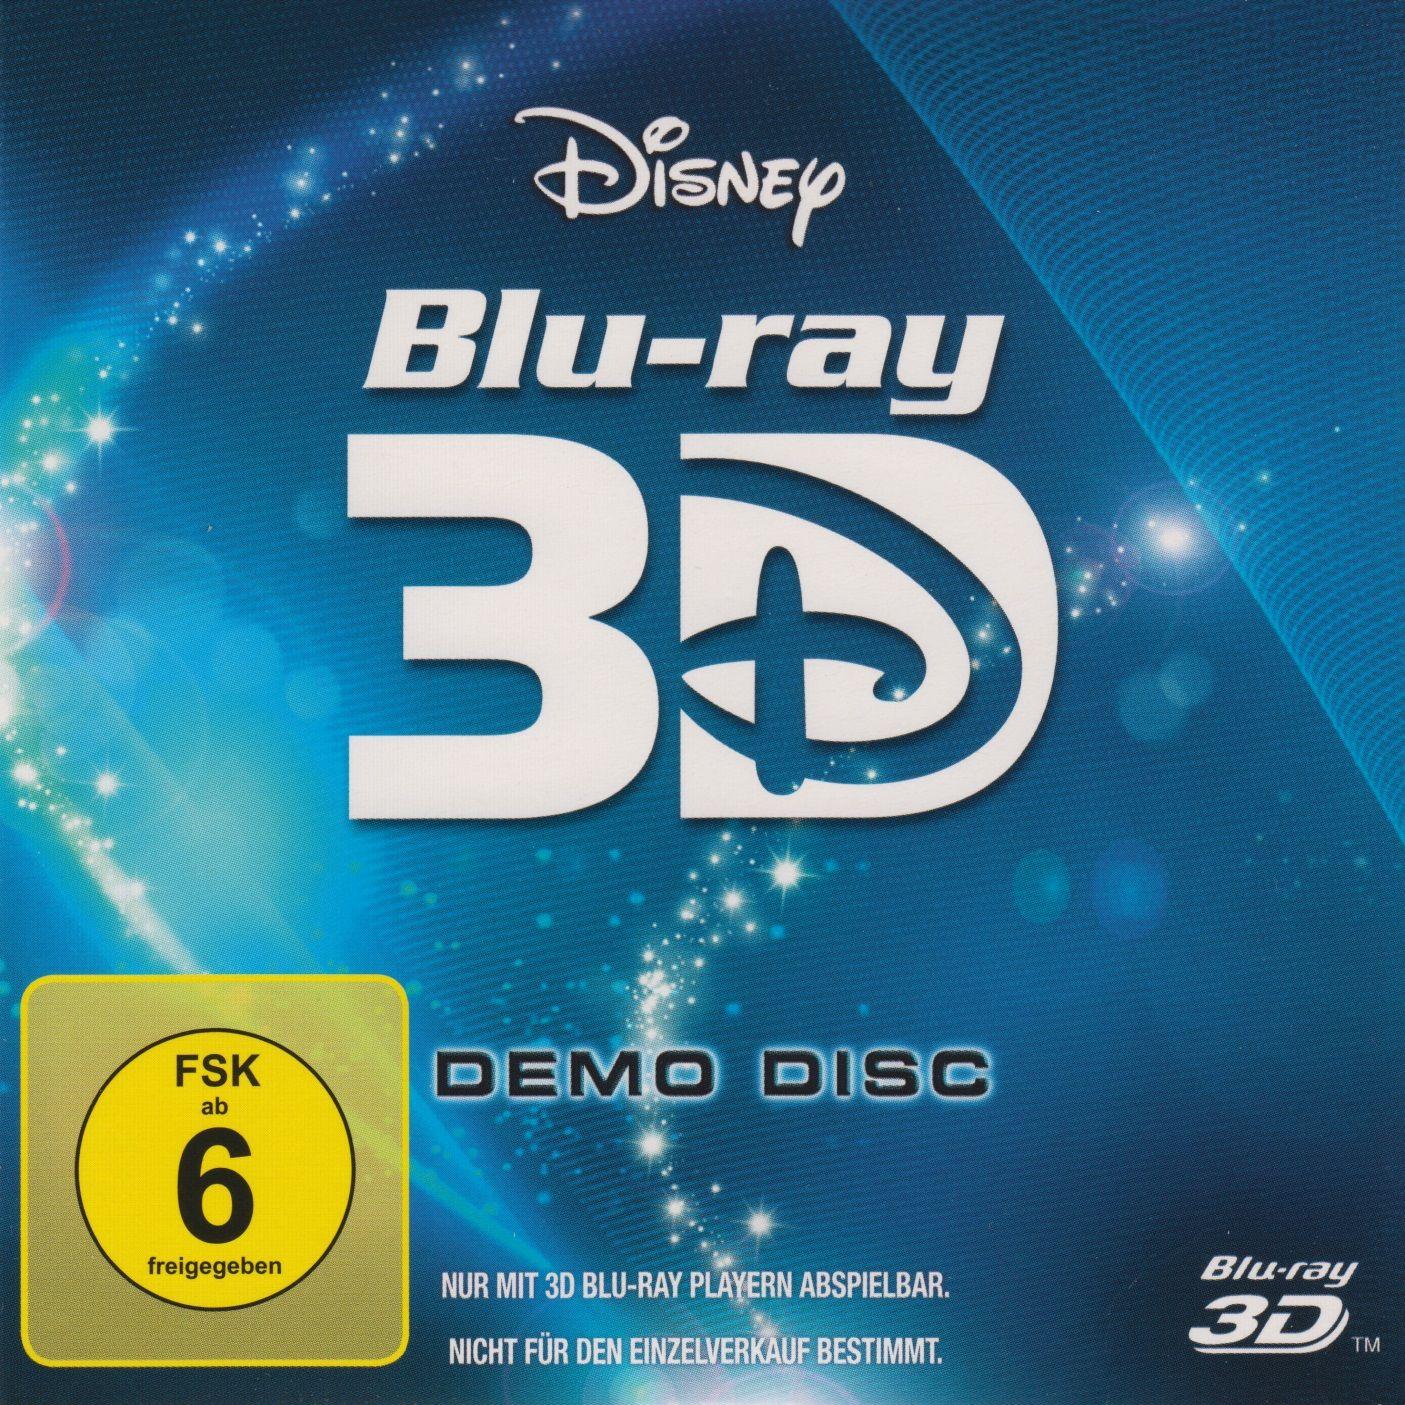 Disney Blu-ray Logo - Disney Blu Ray 3D Demo Disc 2013